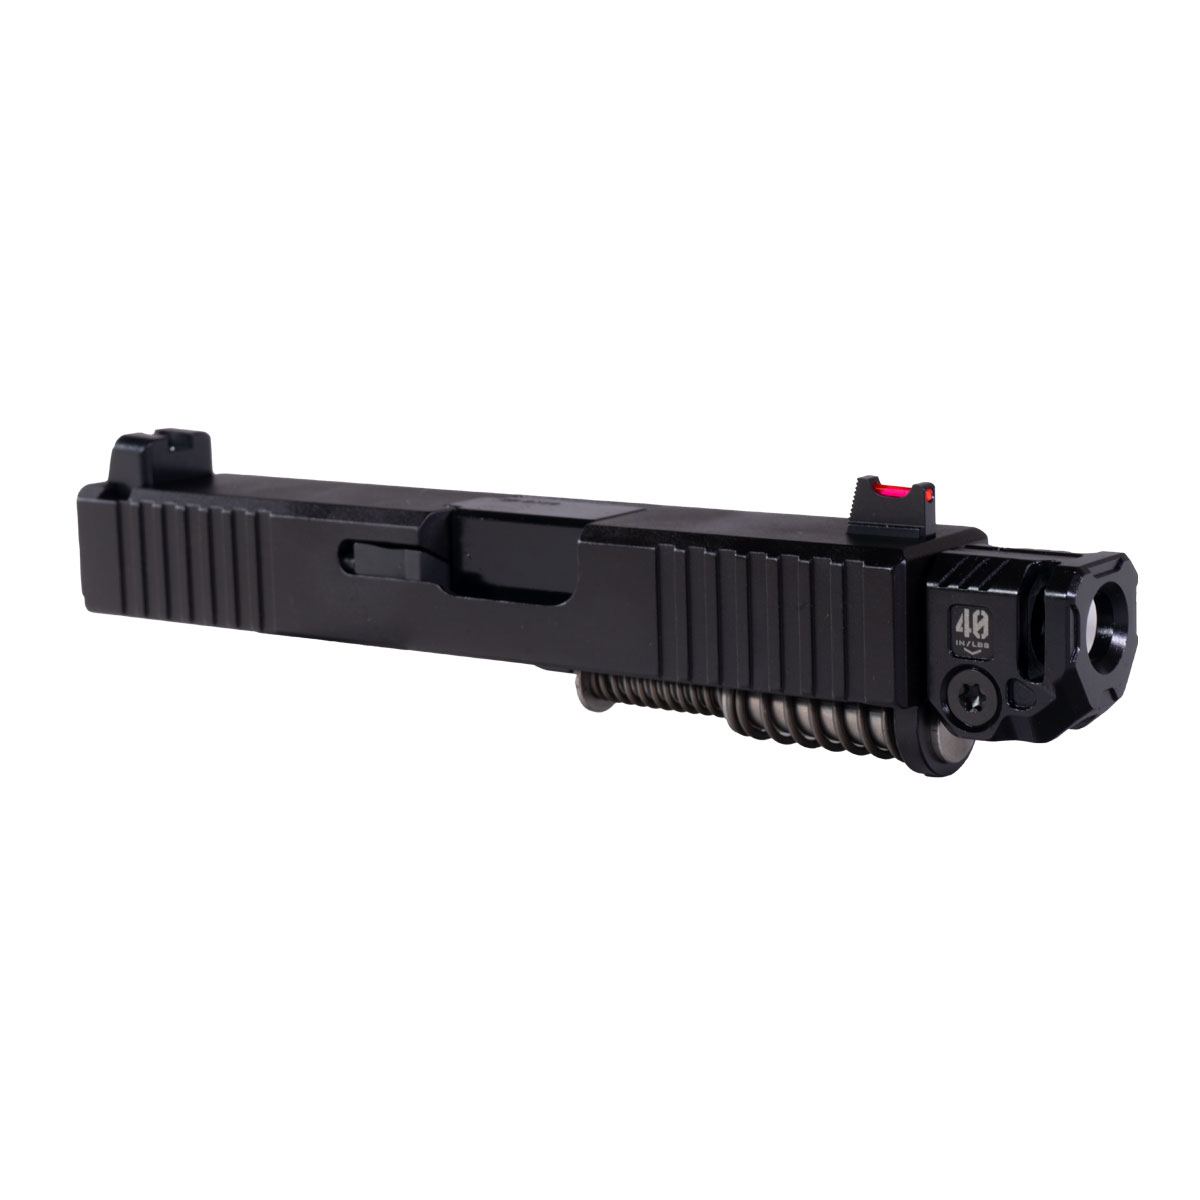 DDS 'Twenty-six w/ Strike Industries Compensator' 9mm Complete Slide Kit - Glock 26 Gen 1-2 Compatible